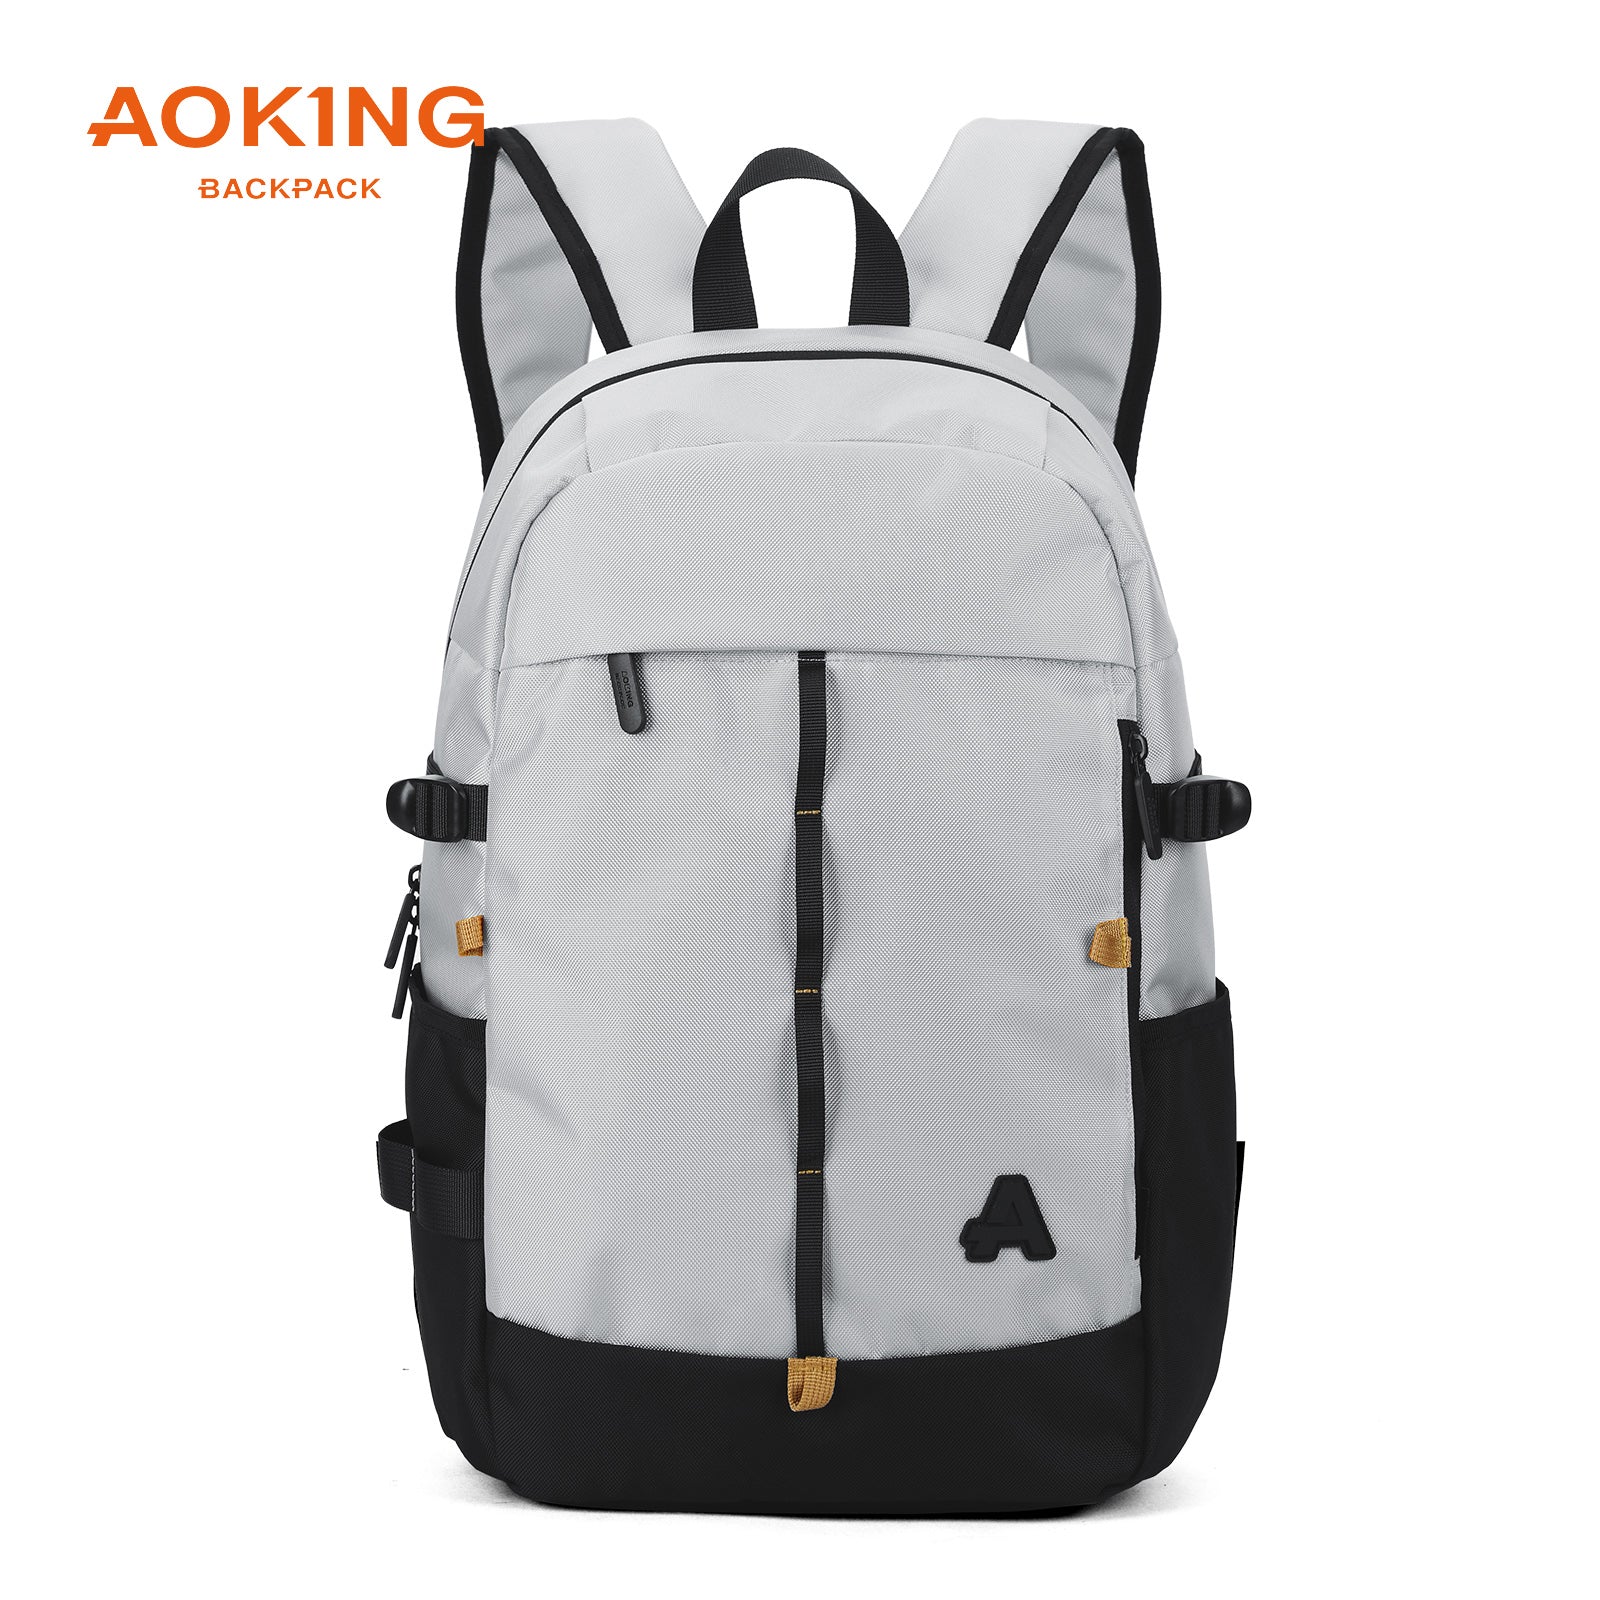 Aoking Backpack Casual Backpack Student Bag XN3029-10